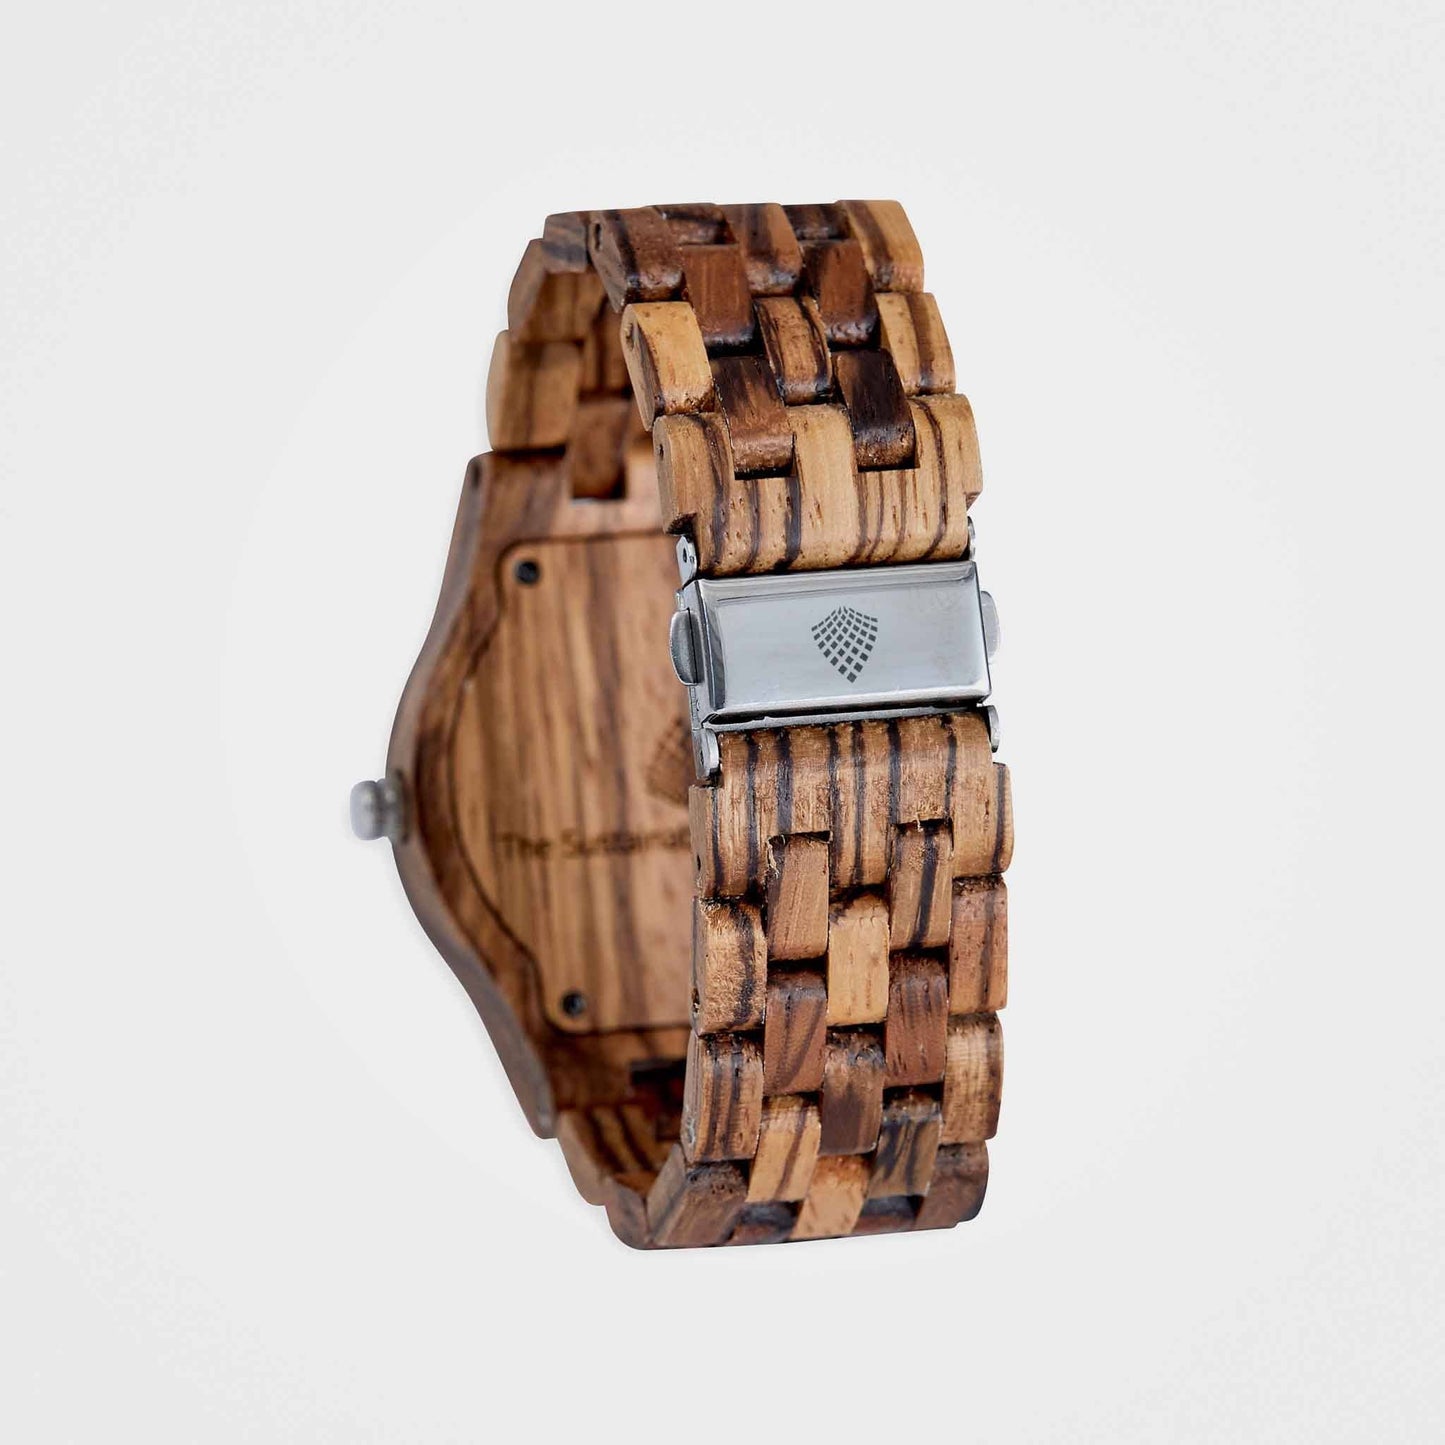 Handmade Wooden Watch For Men: The Yew